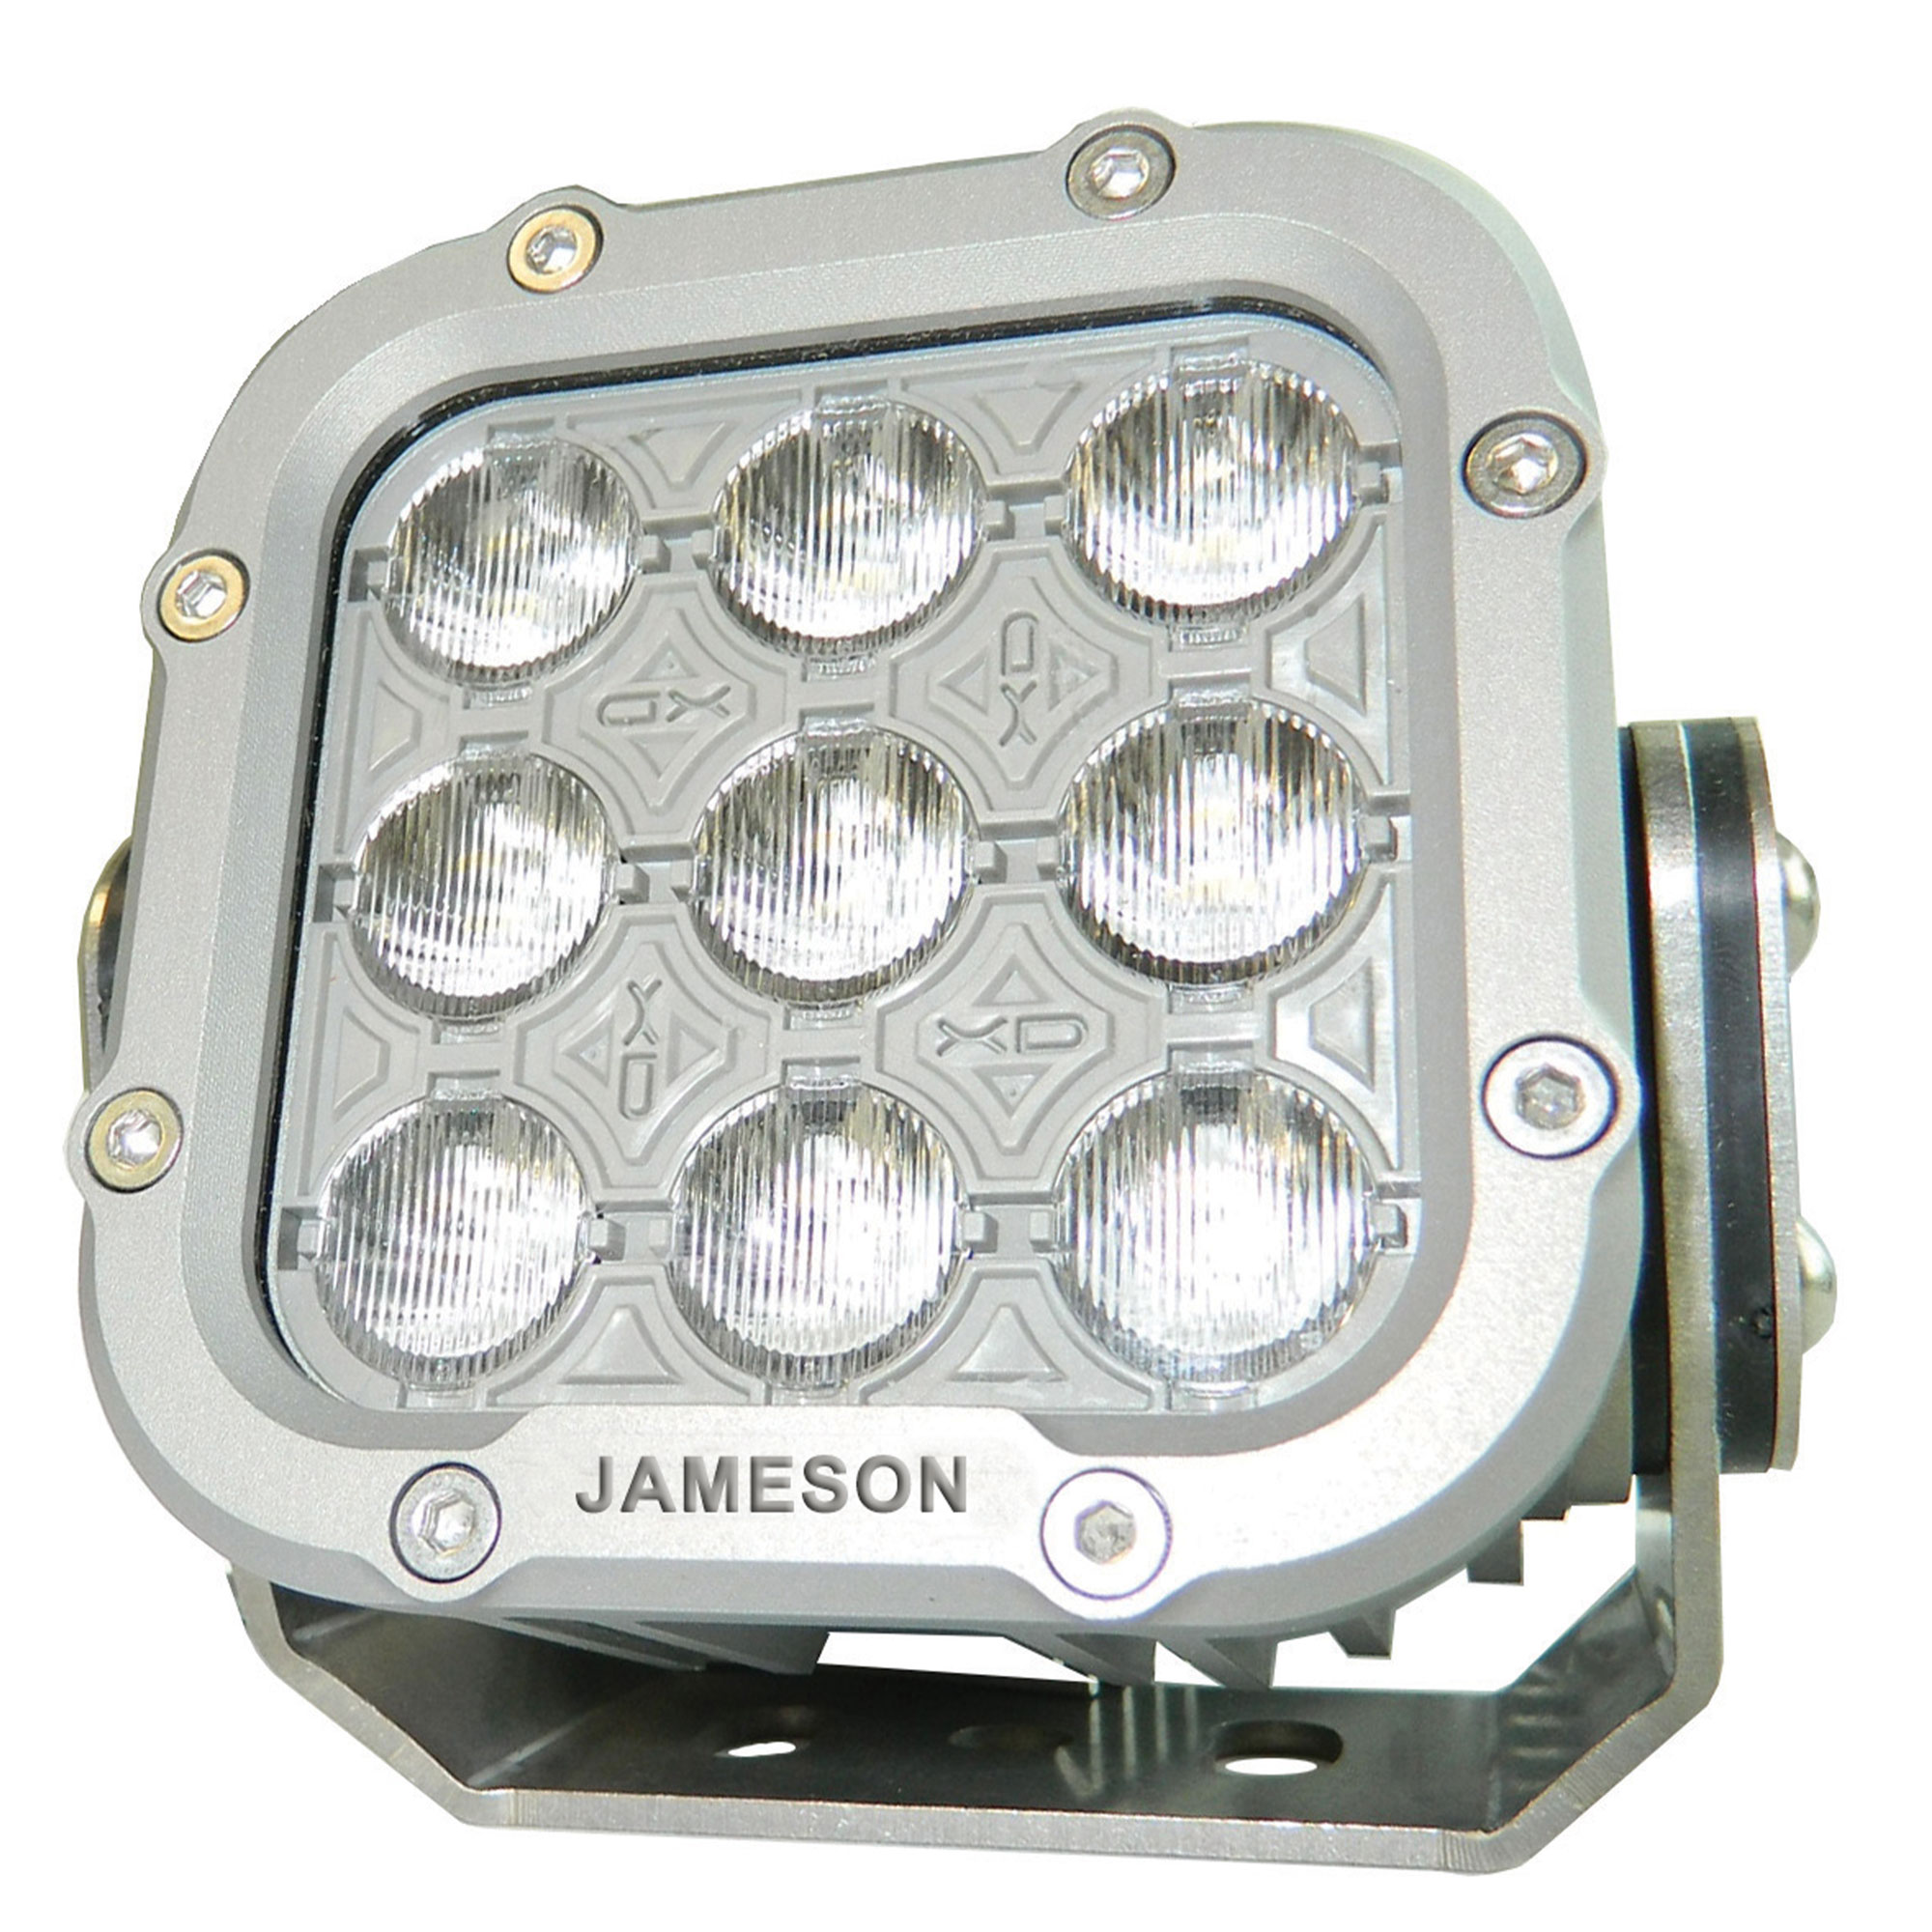 Jameson, 37-26100, LED Explosion Proof Drop Light, 100' Cord